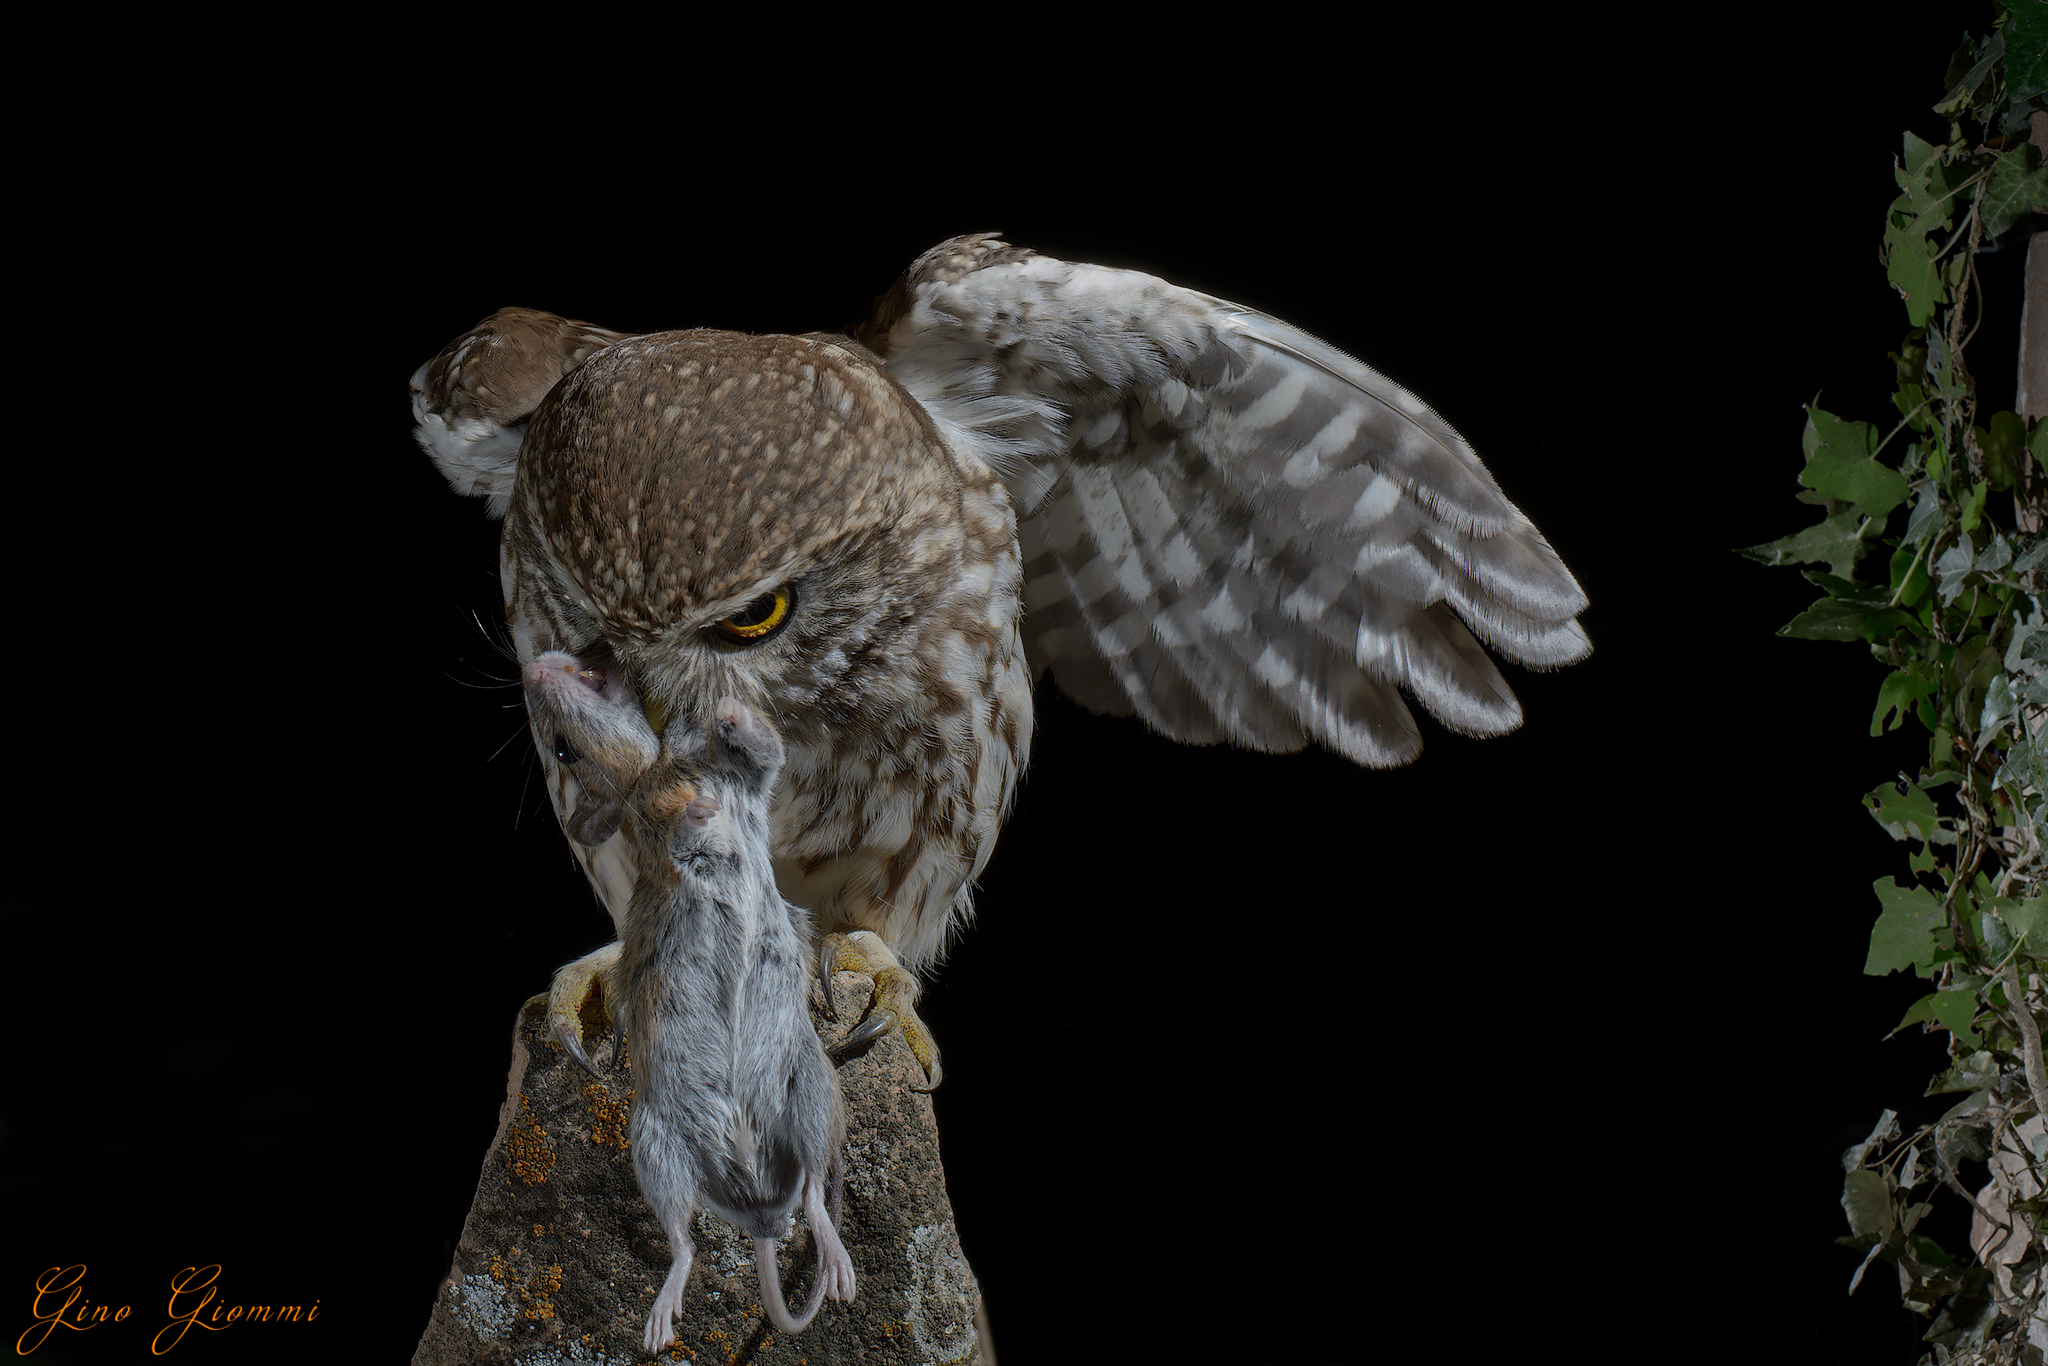 Owl with prey ...